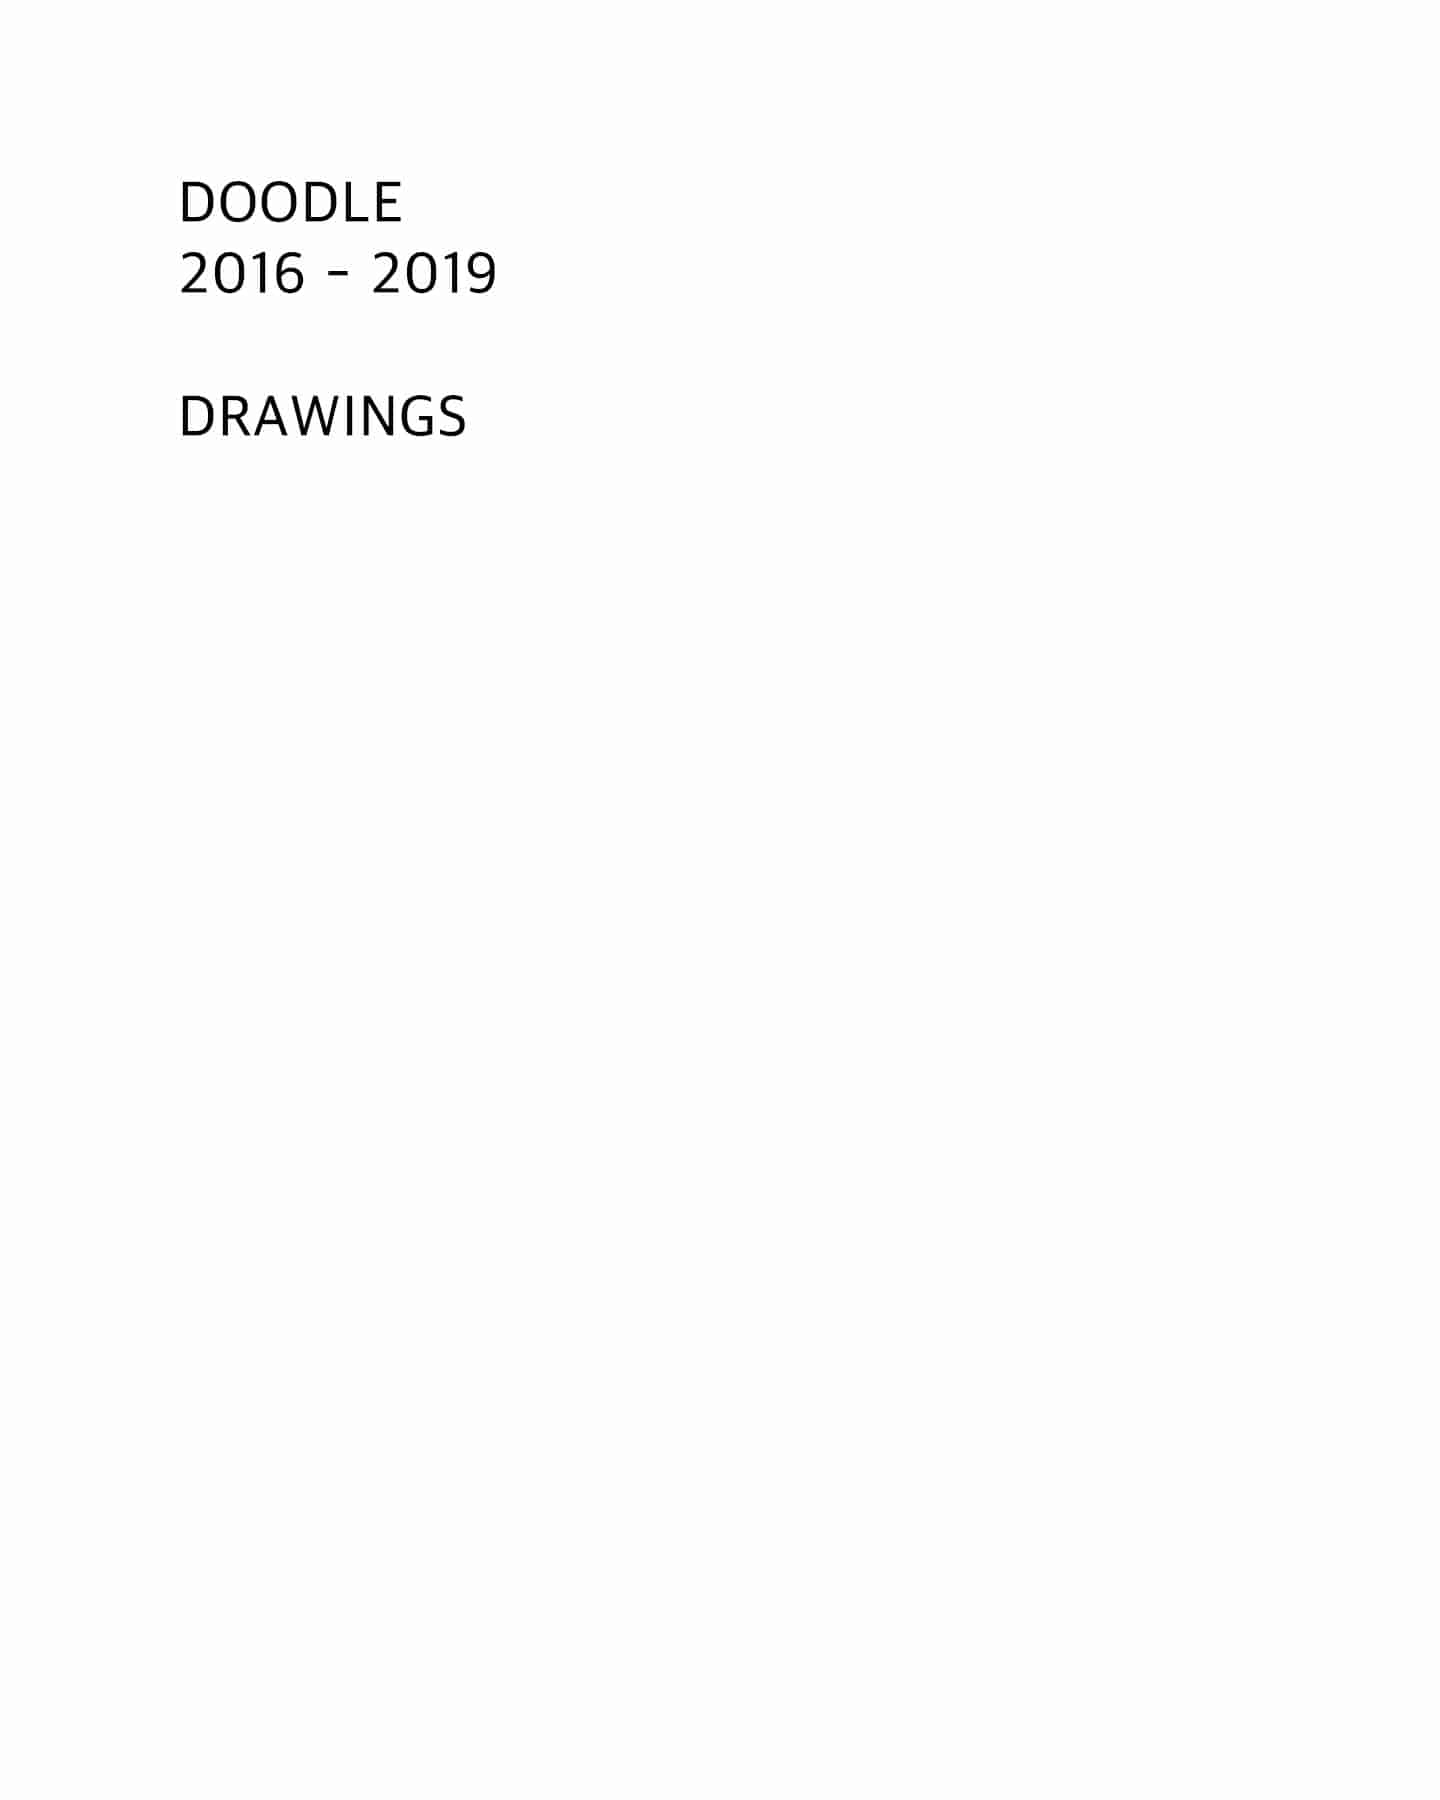 DOODLE 2016 - 2019, drawings